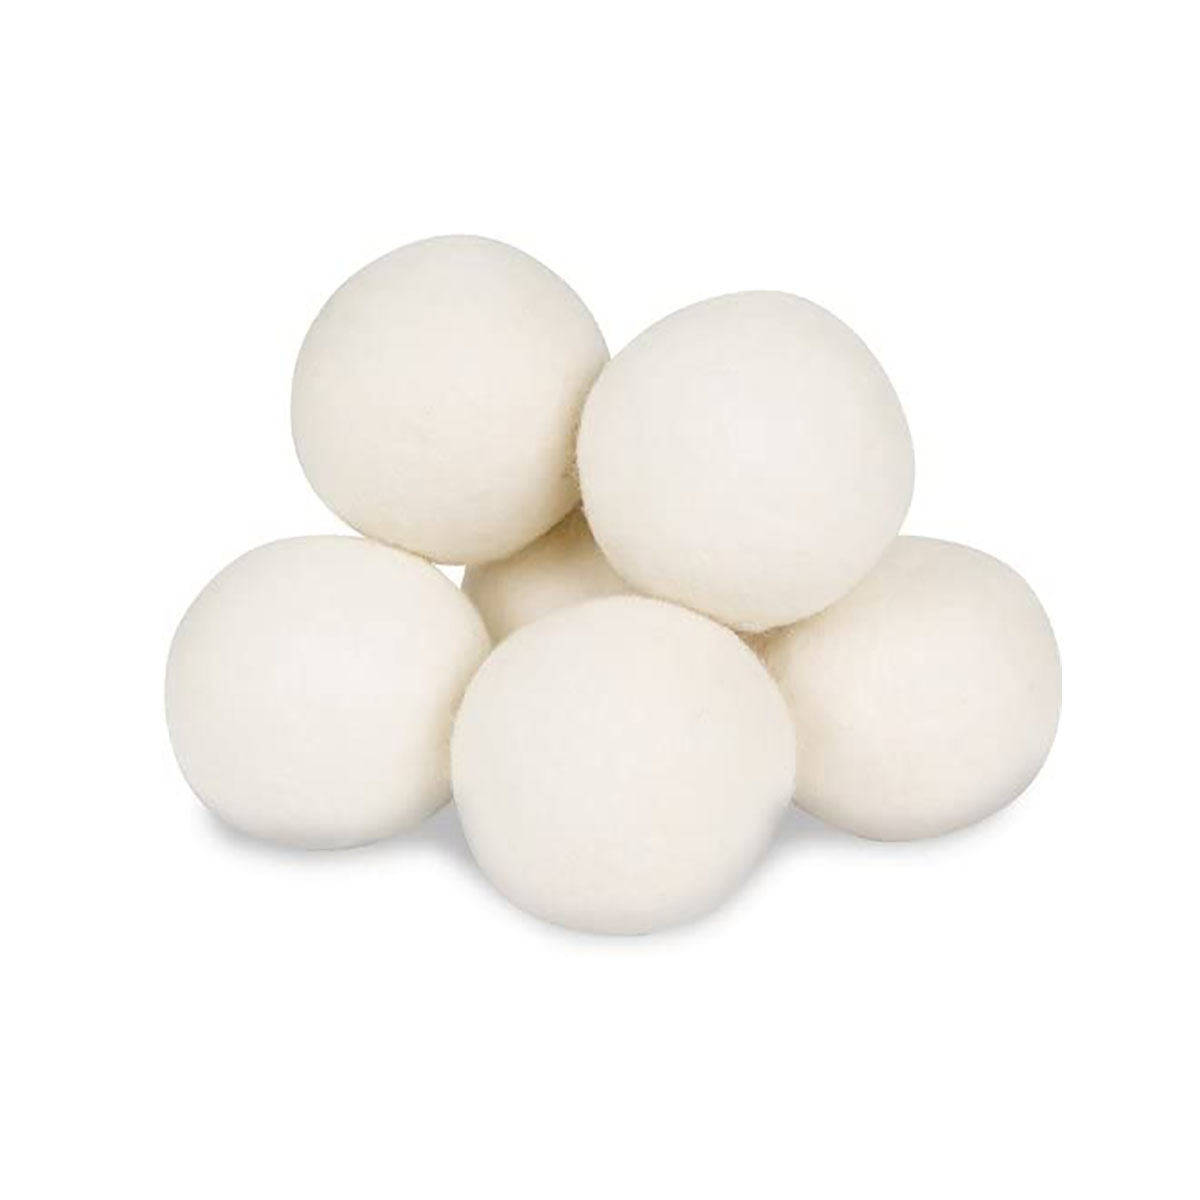 Best Fabric Softener Options: Wool Dryer Balls